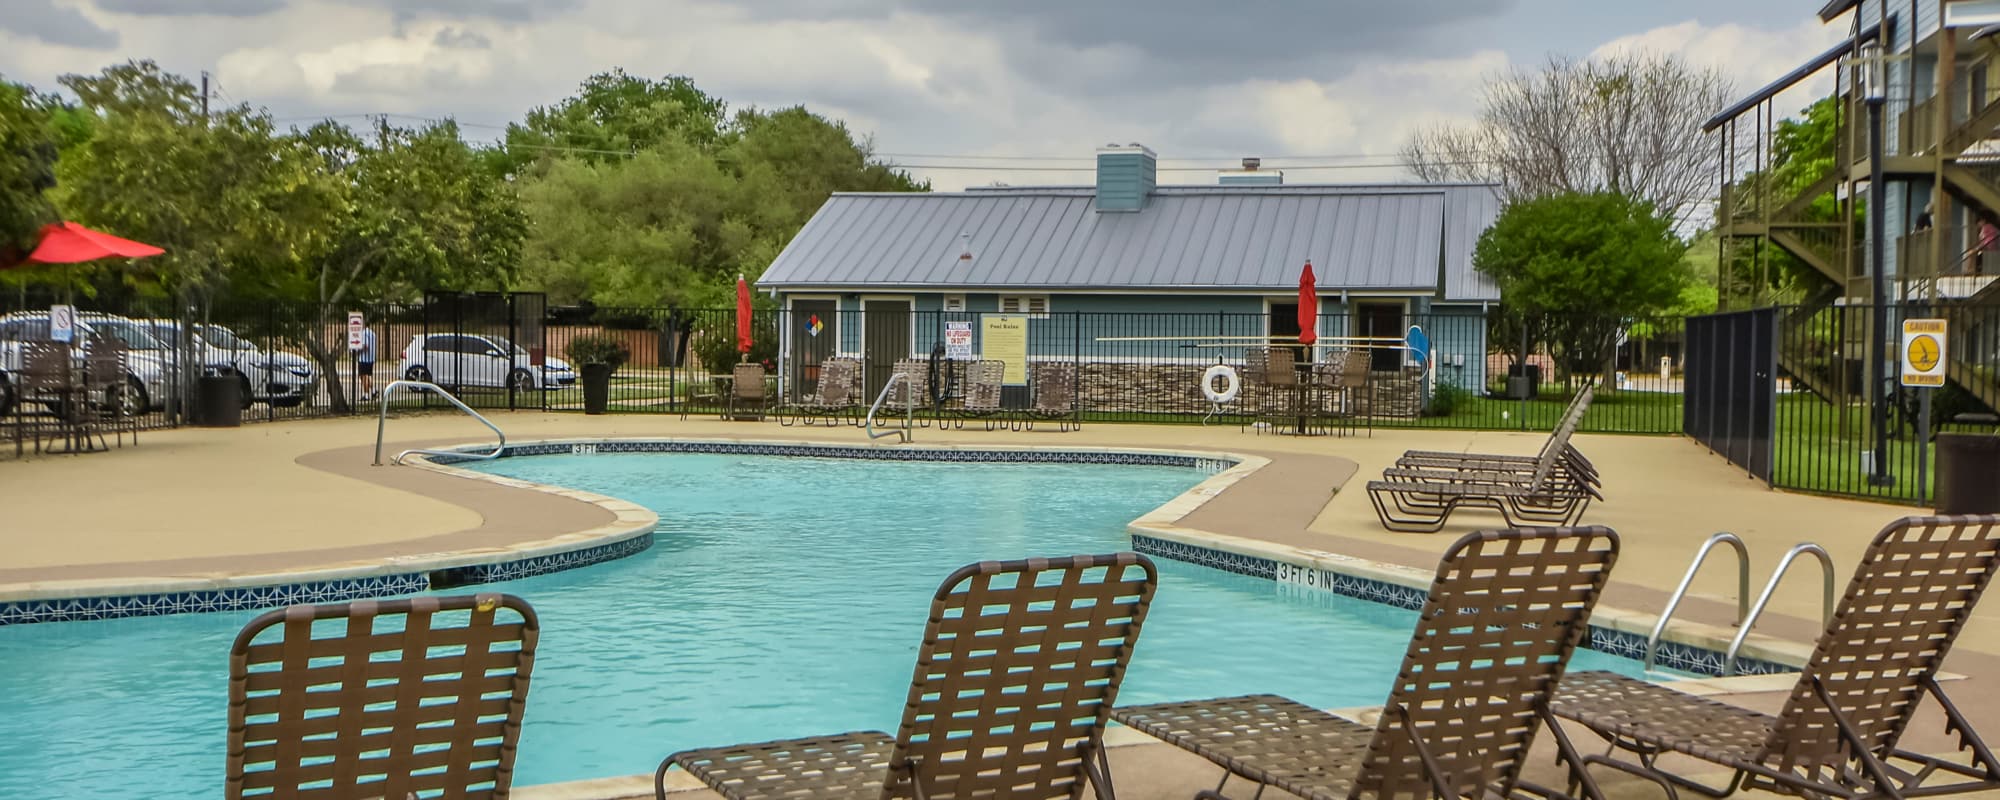 Swimming pool at Nichols Park in Austin, Texas